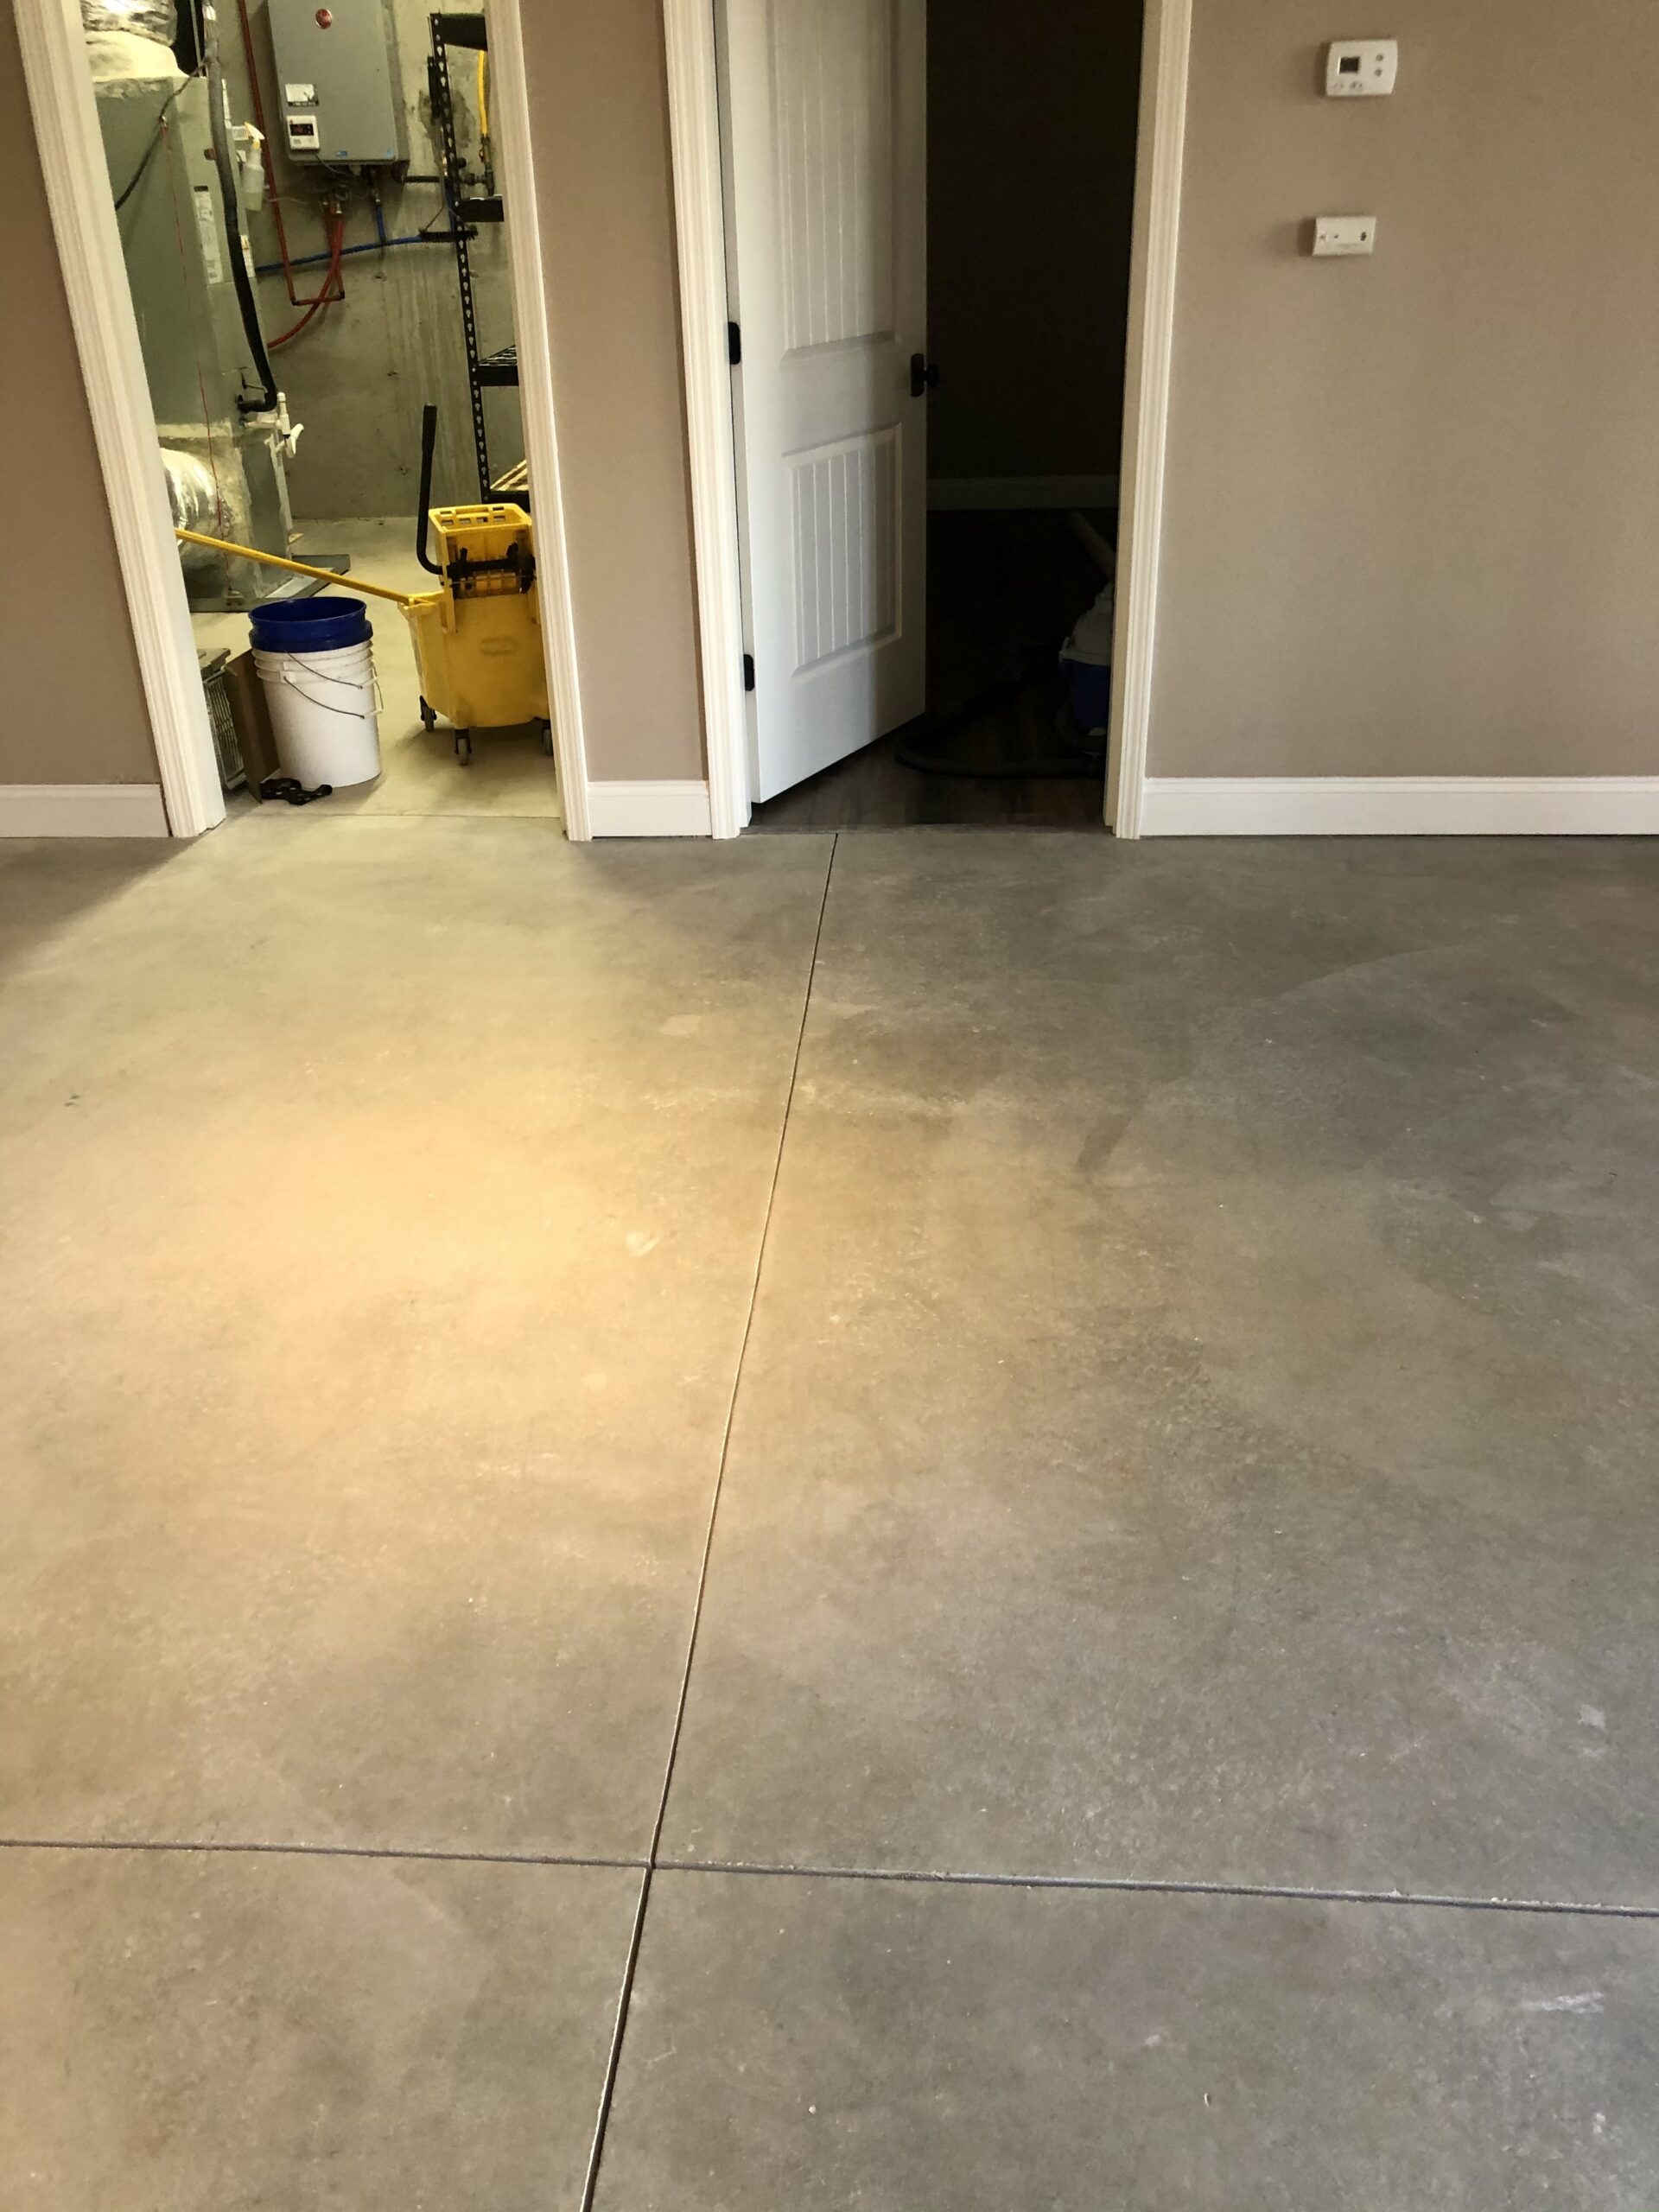 Concrete basement floor before acid stain